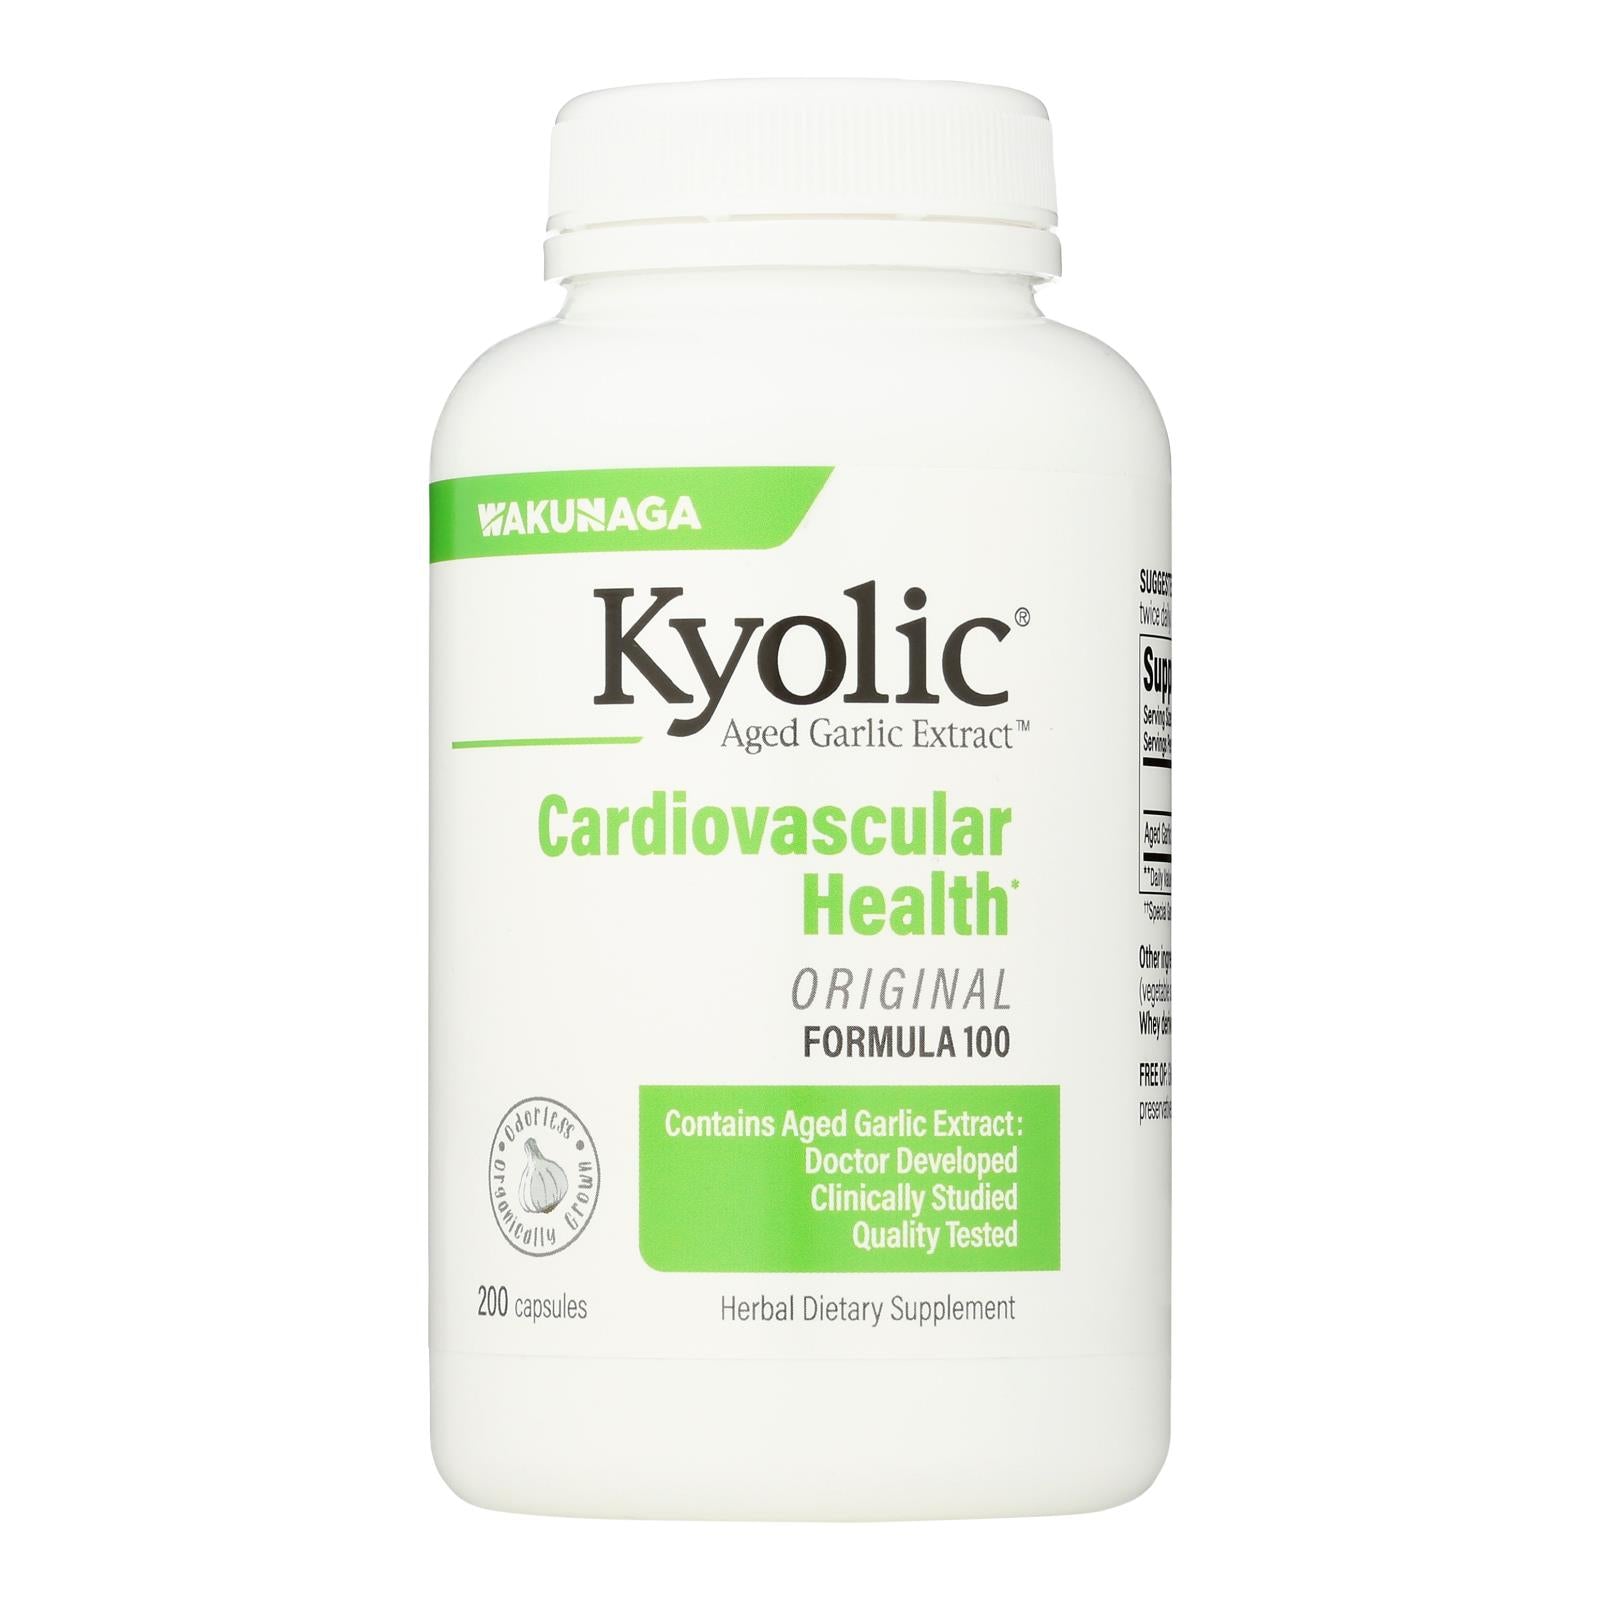 Kyolic - Aged Garlic Extract Cardiovascular Formula 100 - 200 Capsules